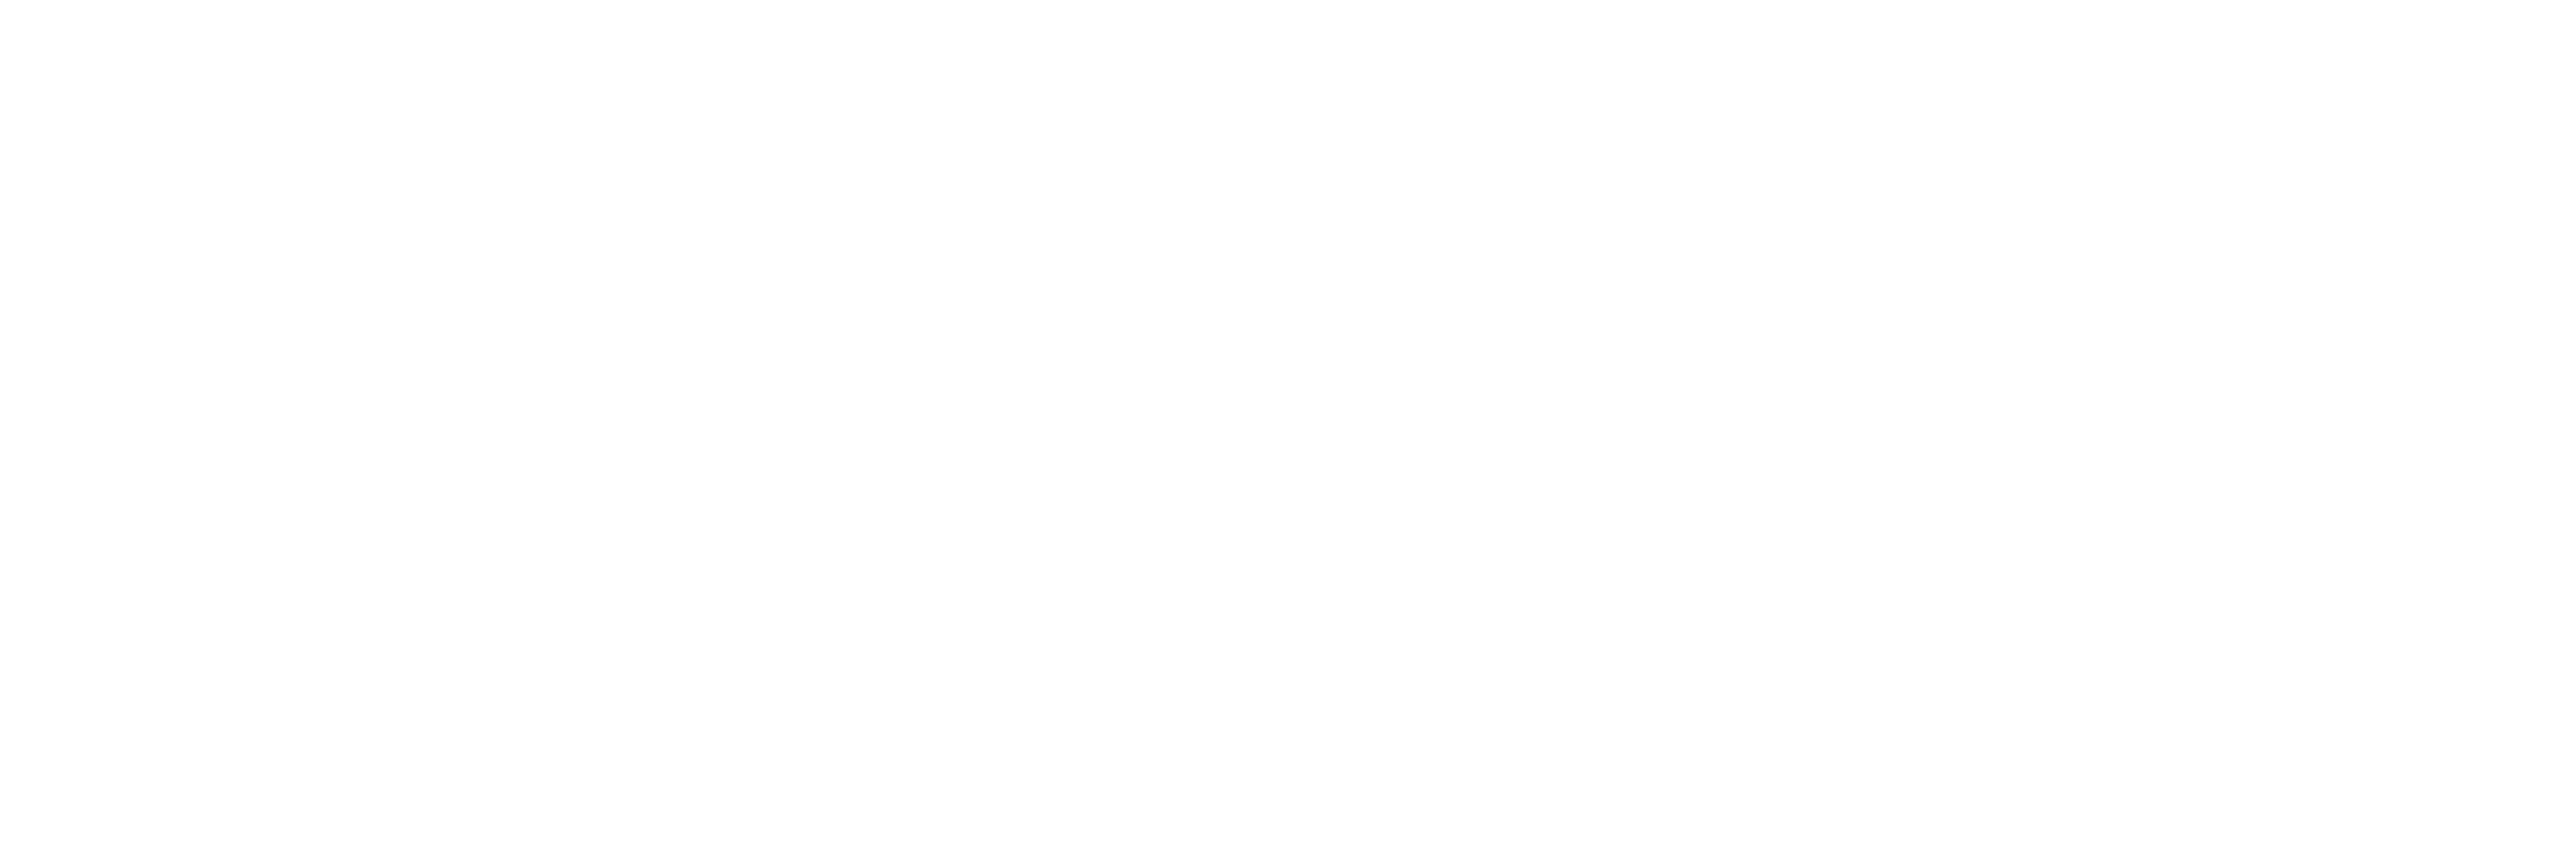 coompanion impact logo